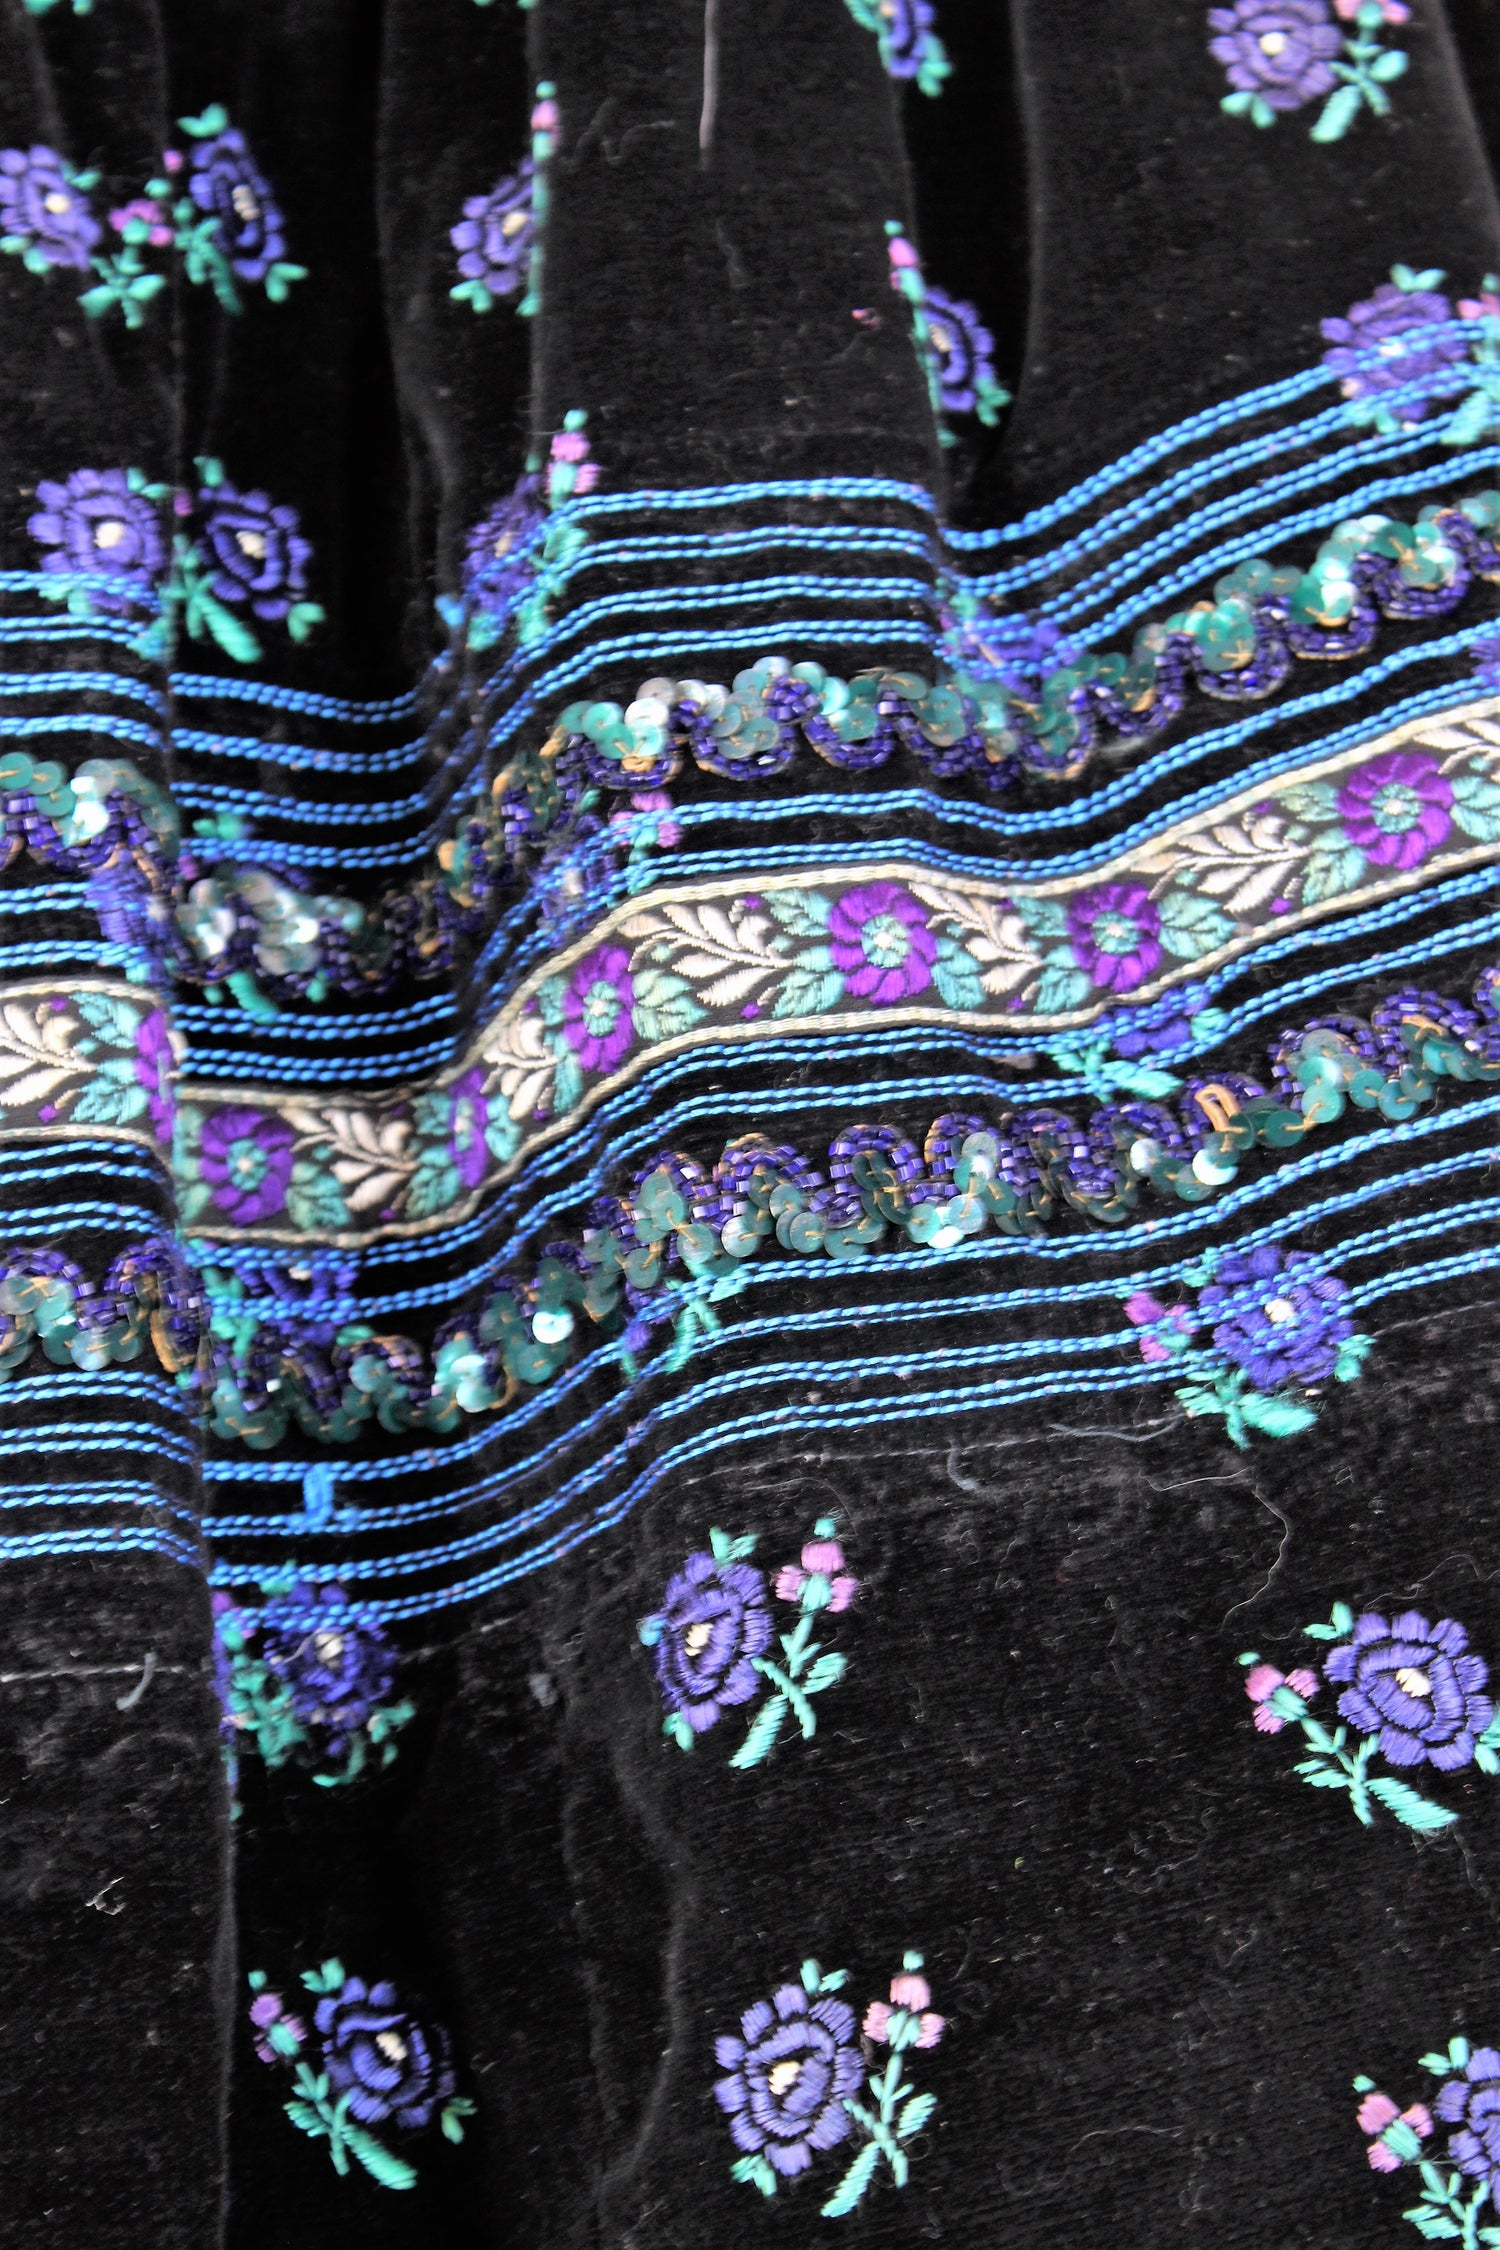 Vintage 1950s Black Velvet Full Skirt With Purple Flower Embroidery and Sequin Trim